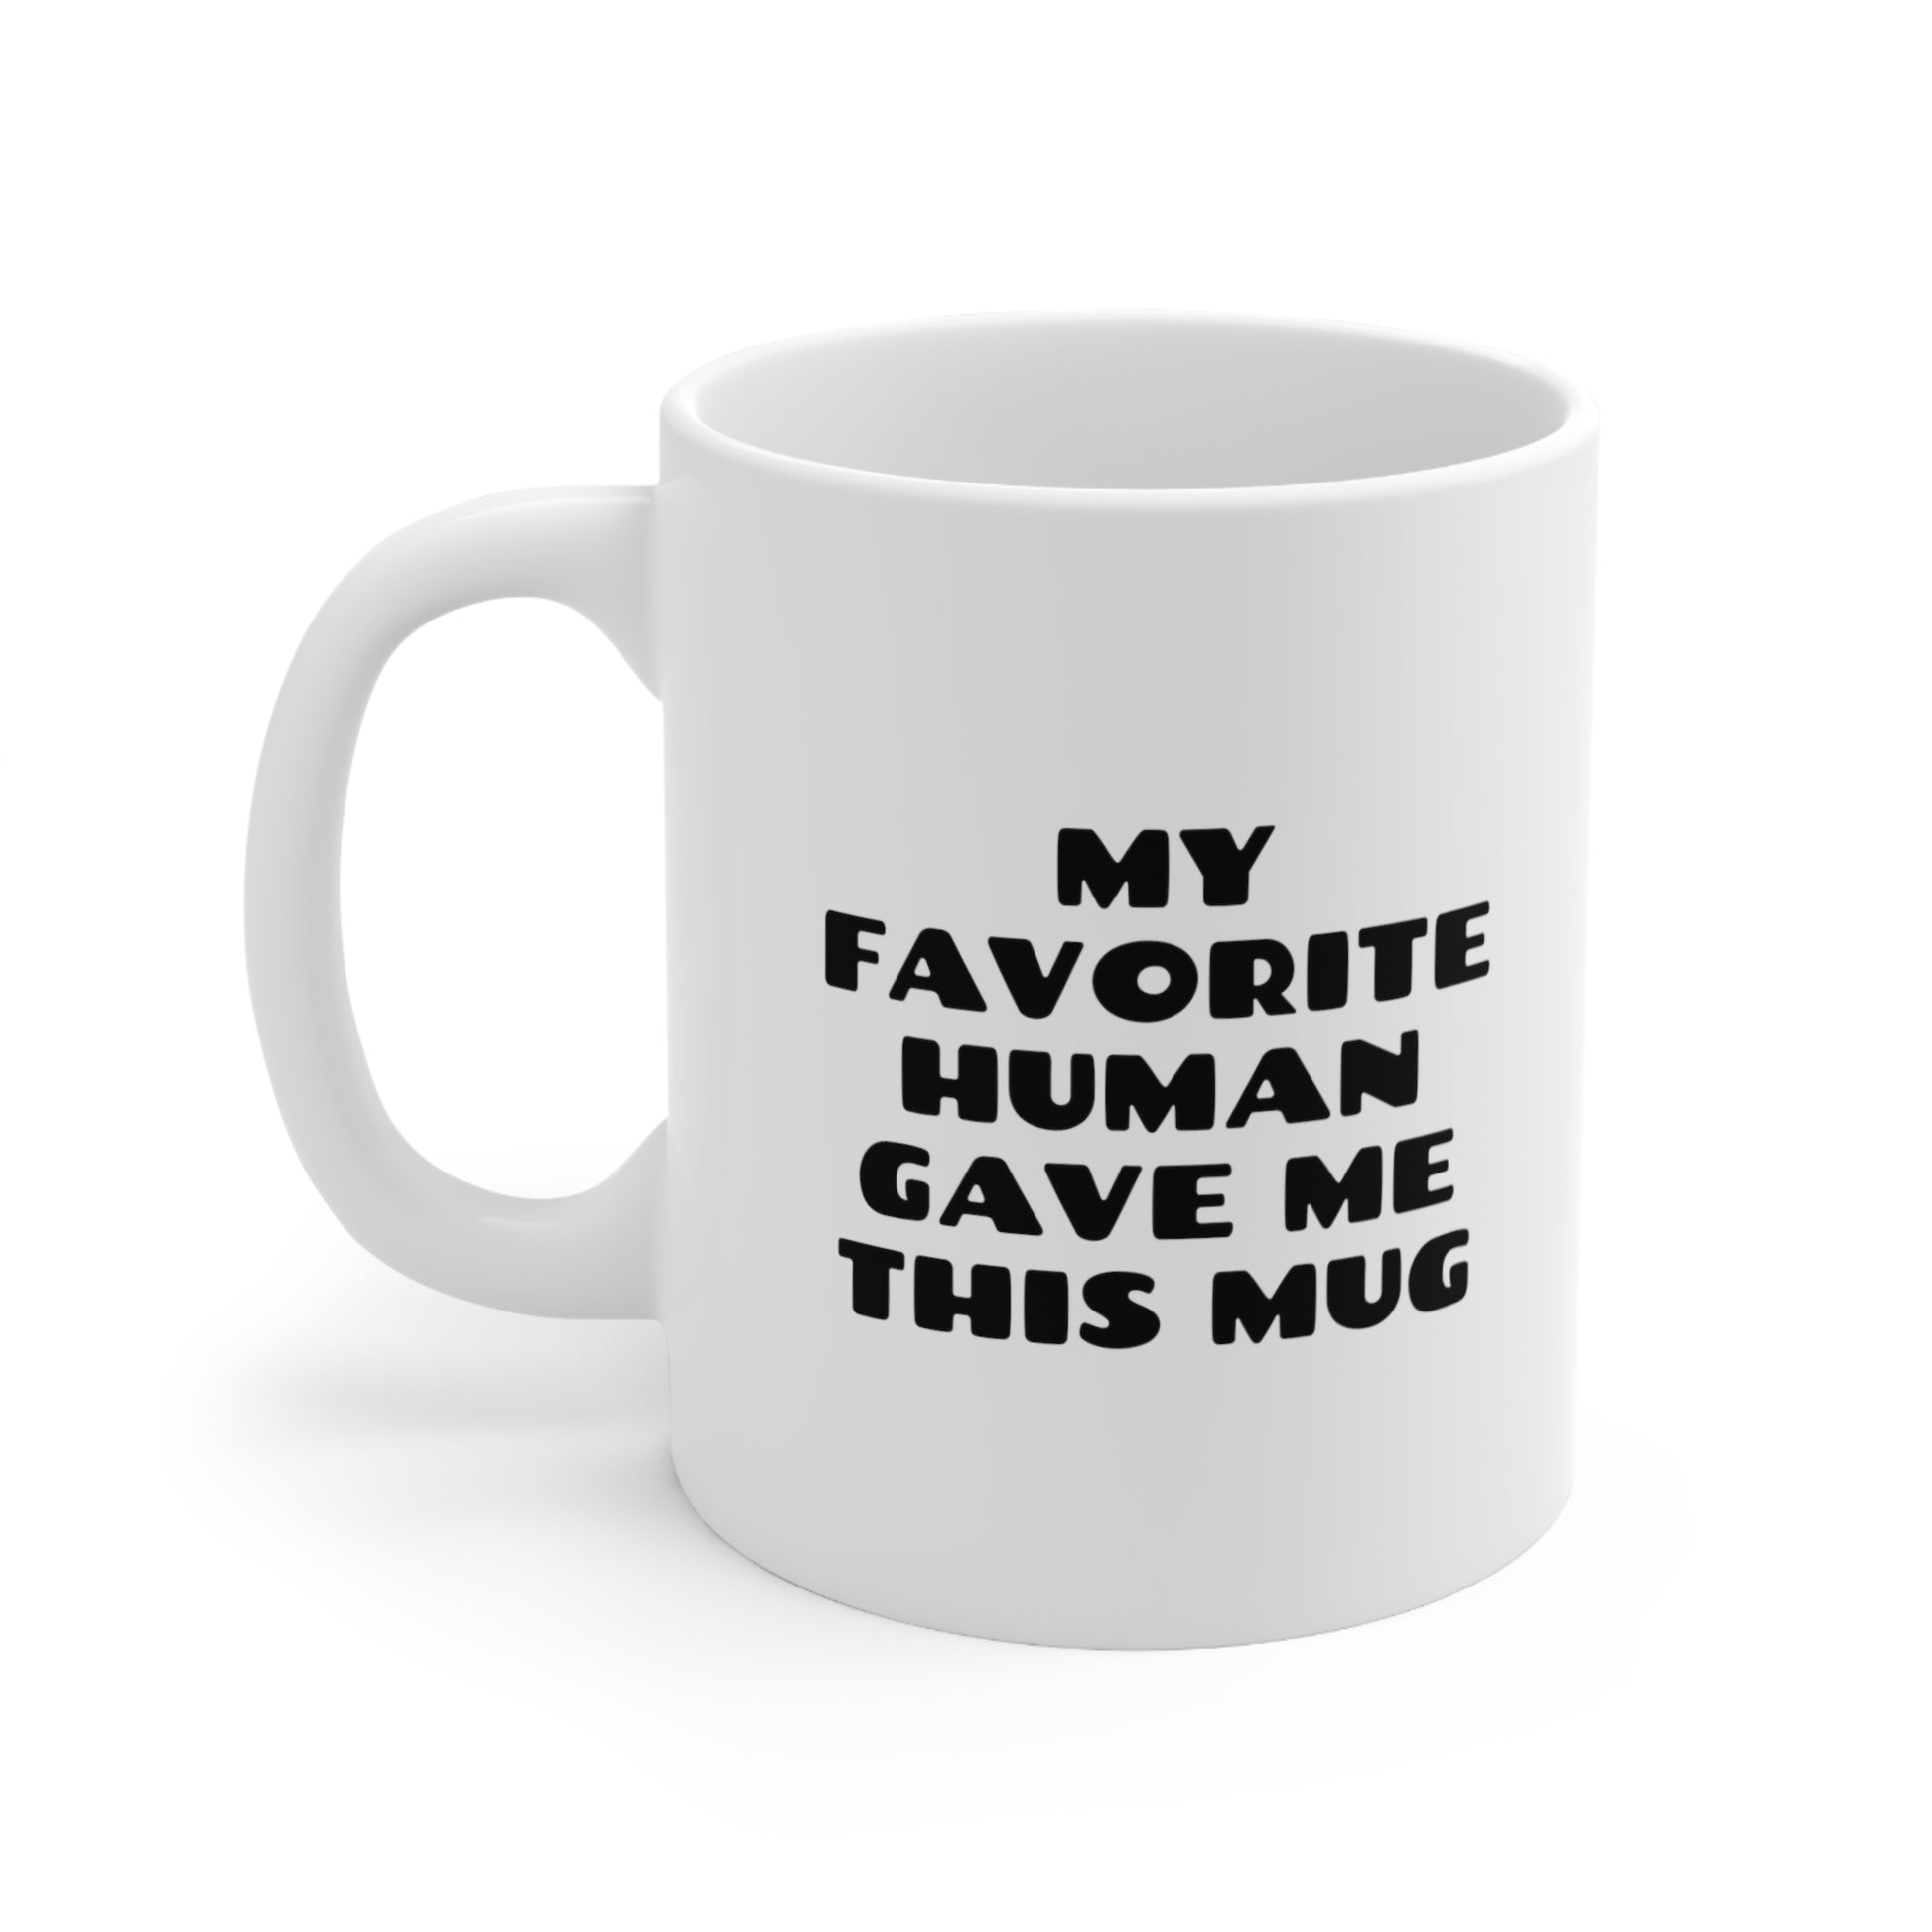 My Favorite Human Gave Me This Mug Coffee Cup